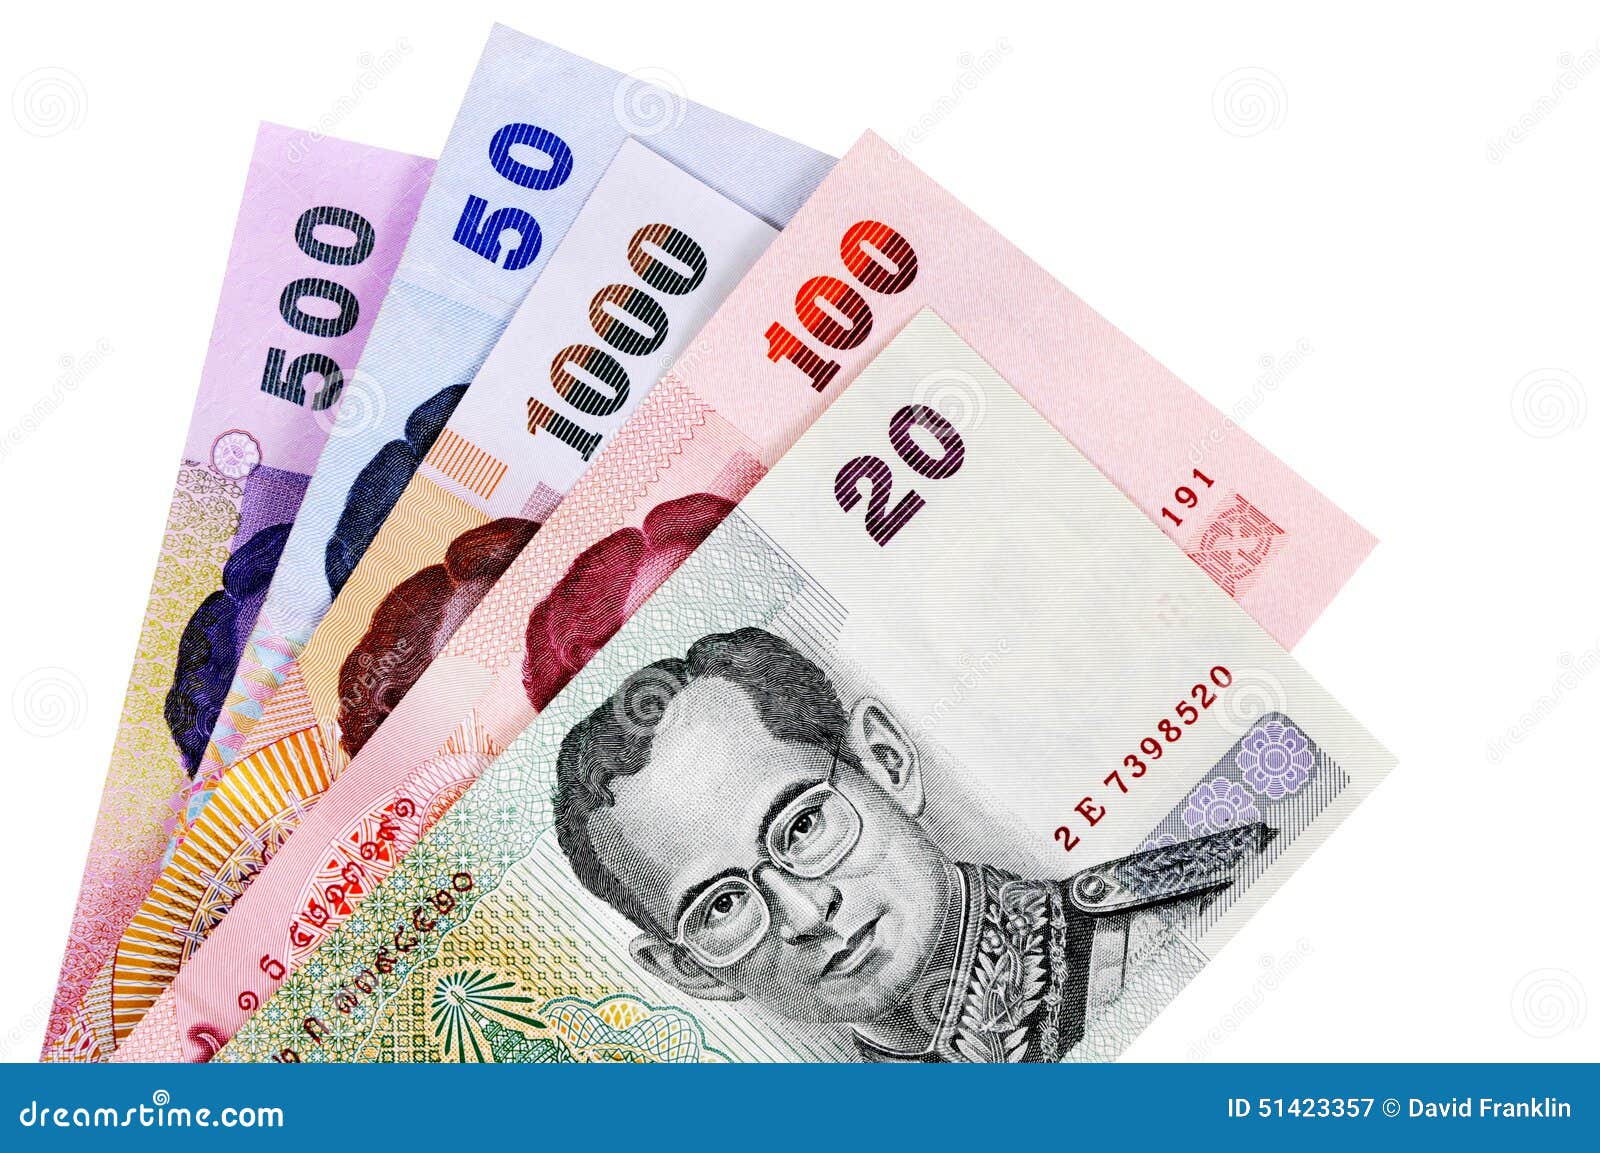 3 бата в рублях. Тайский бат. Баты купюры. Бат денежная единица Таиланда. Тайланд картинка валюты.